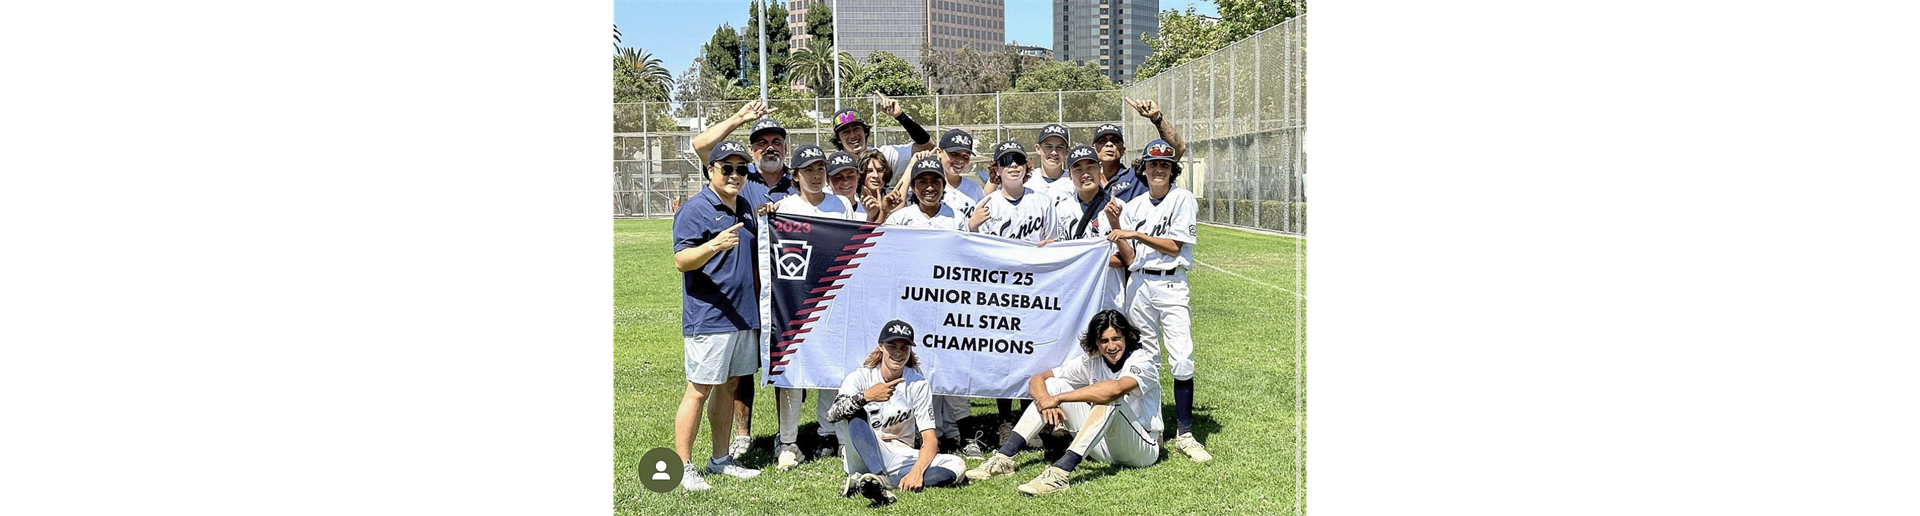 Congrats Junior All-Stars! District 25 Champions!